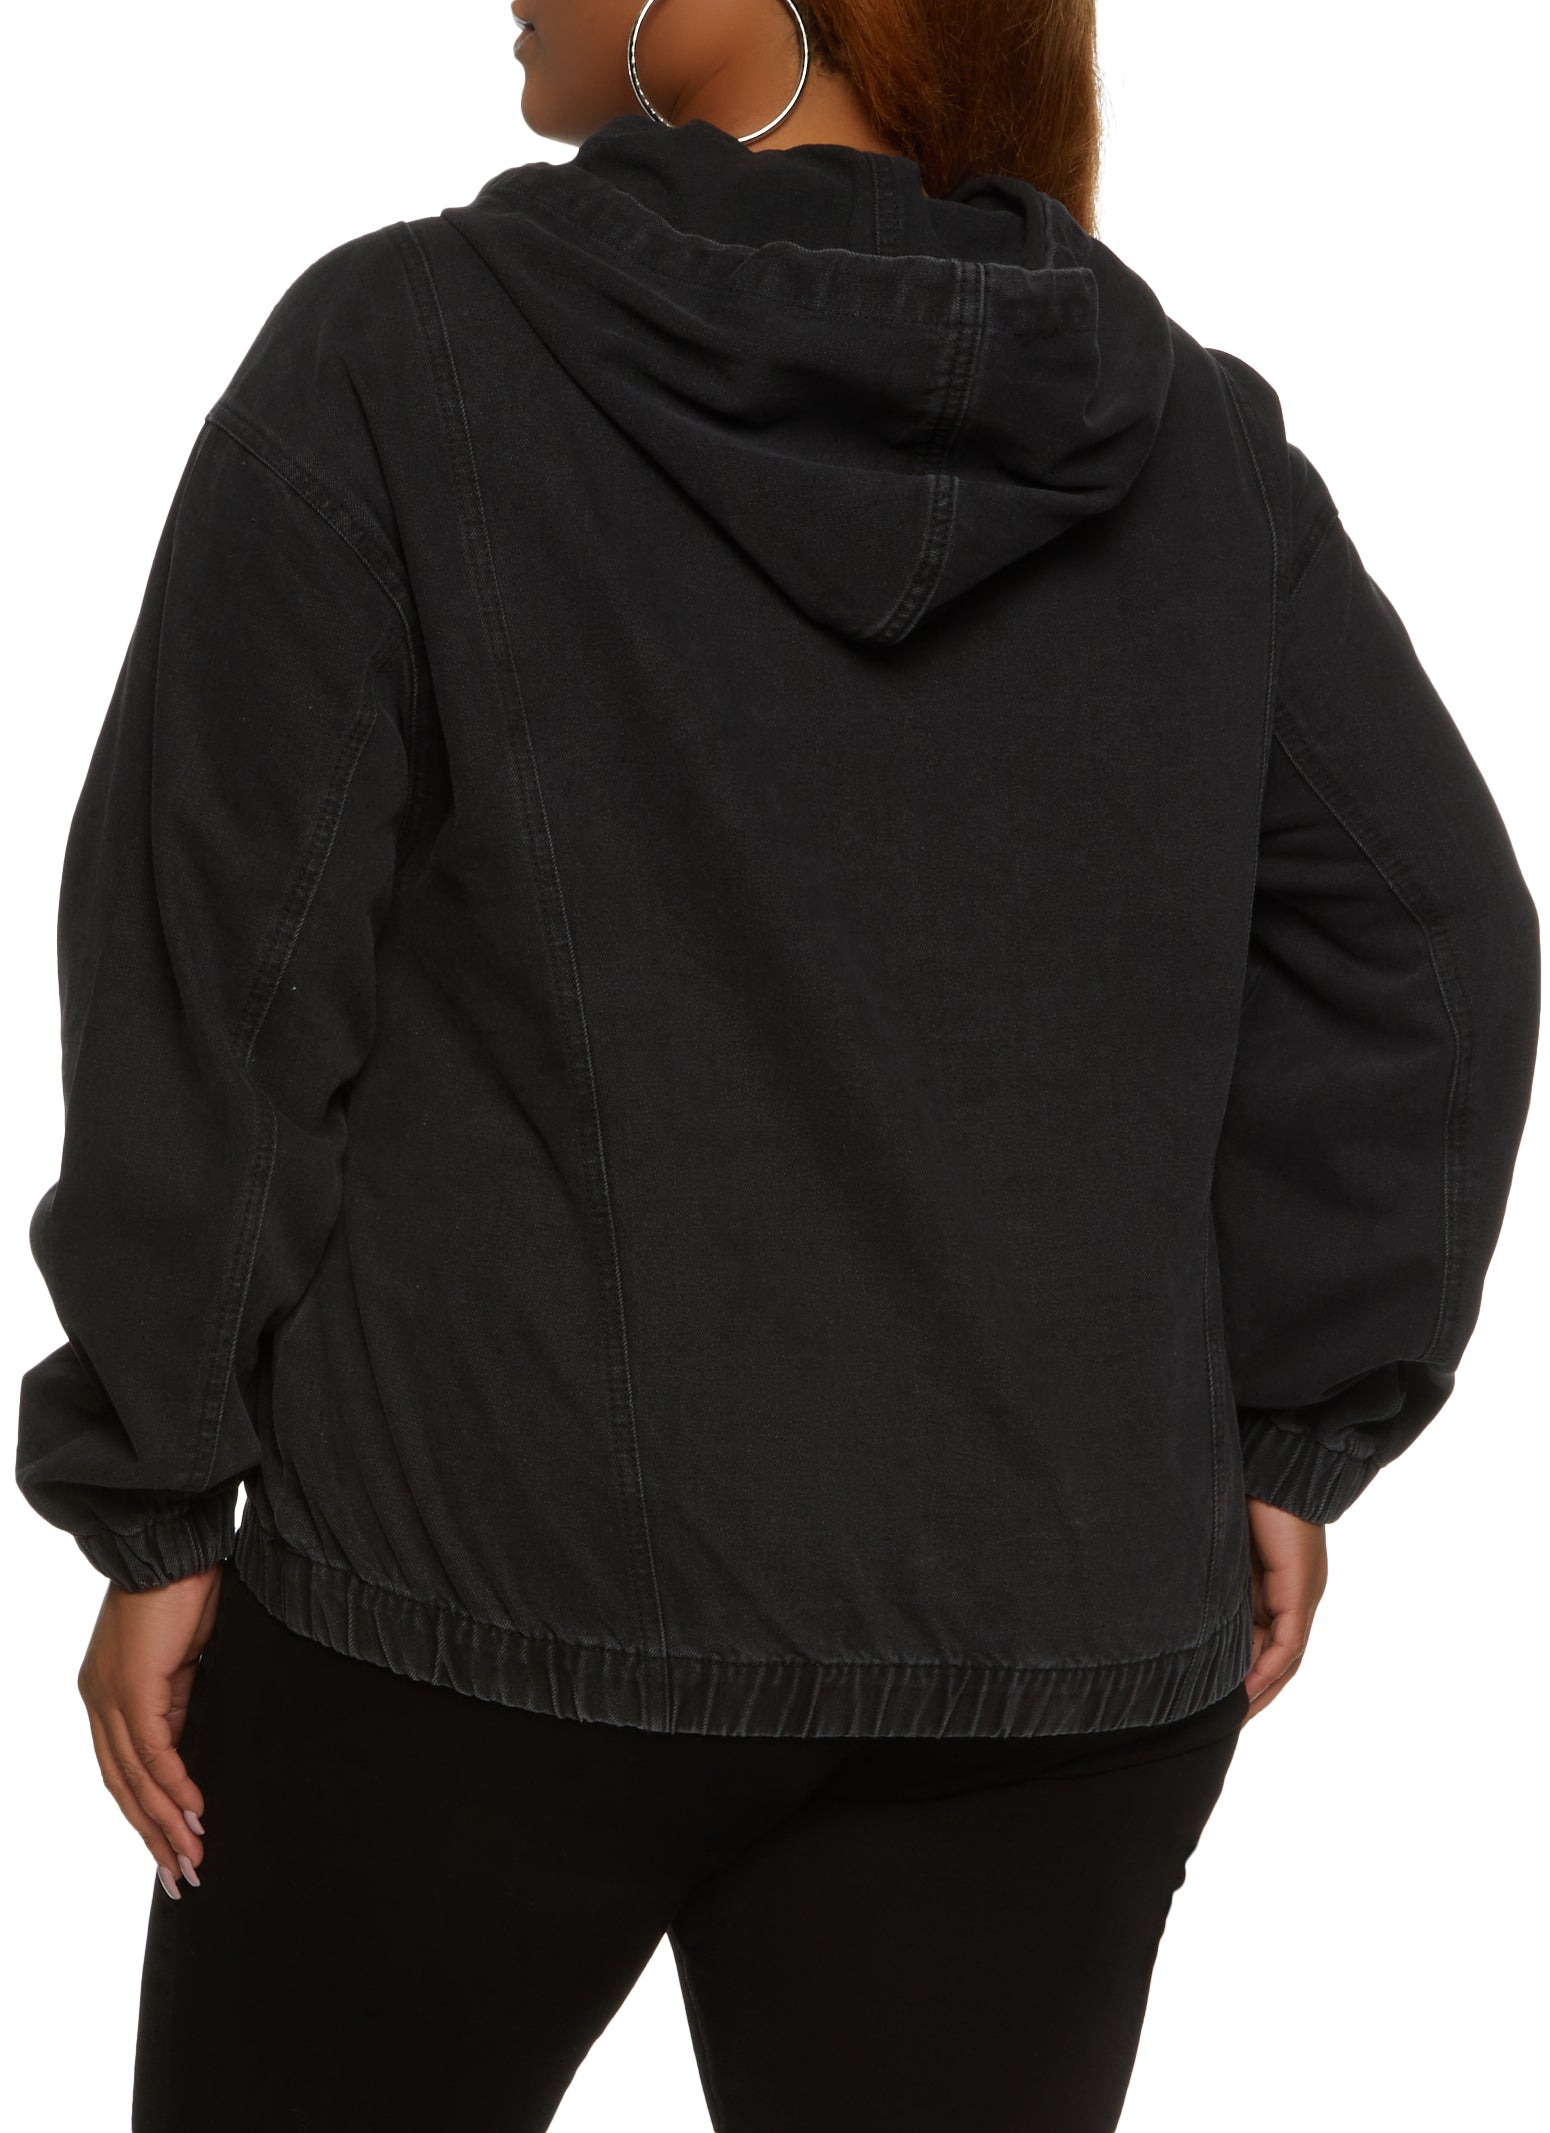 Plus Size Denim Pullover Sweatshirt - Medium Wash